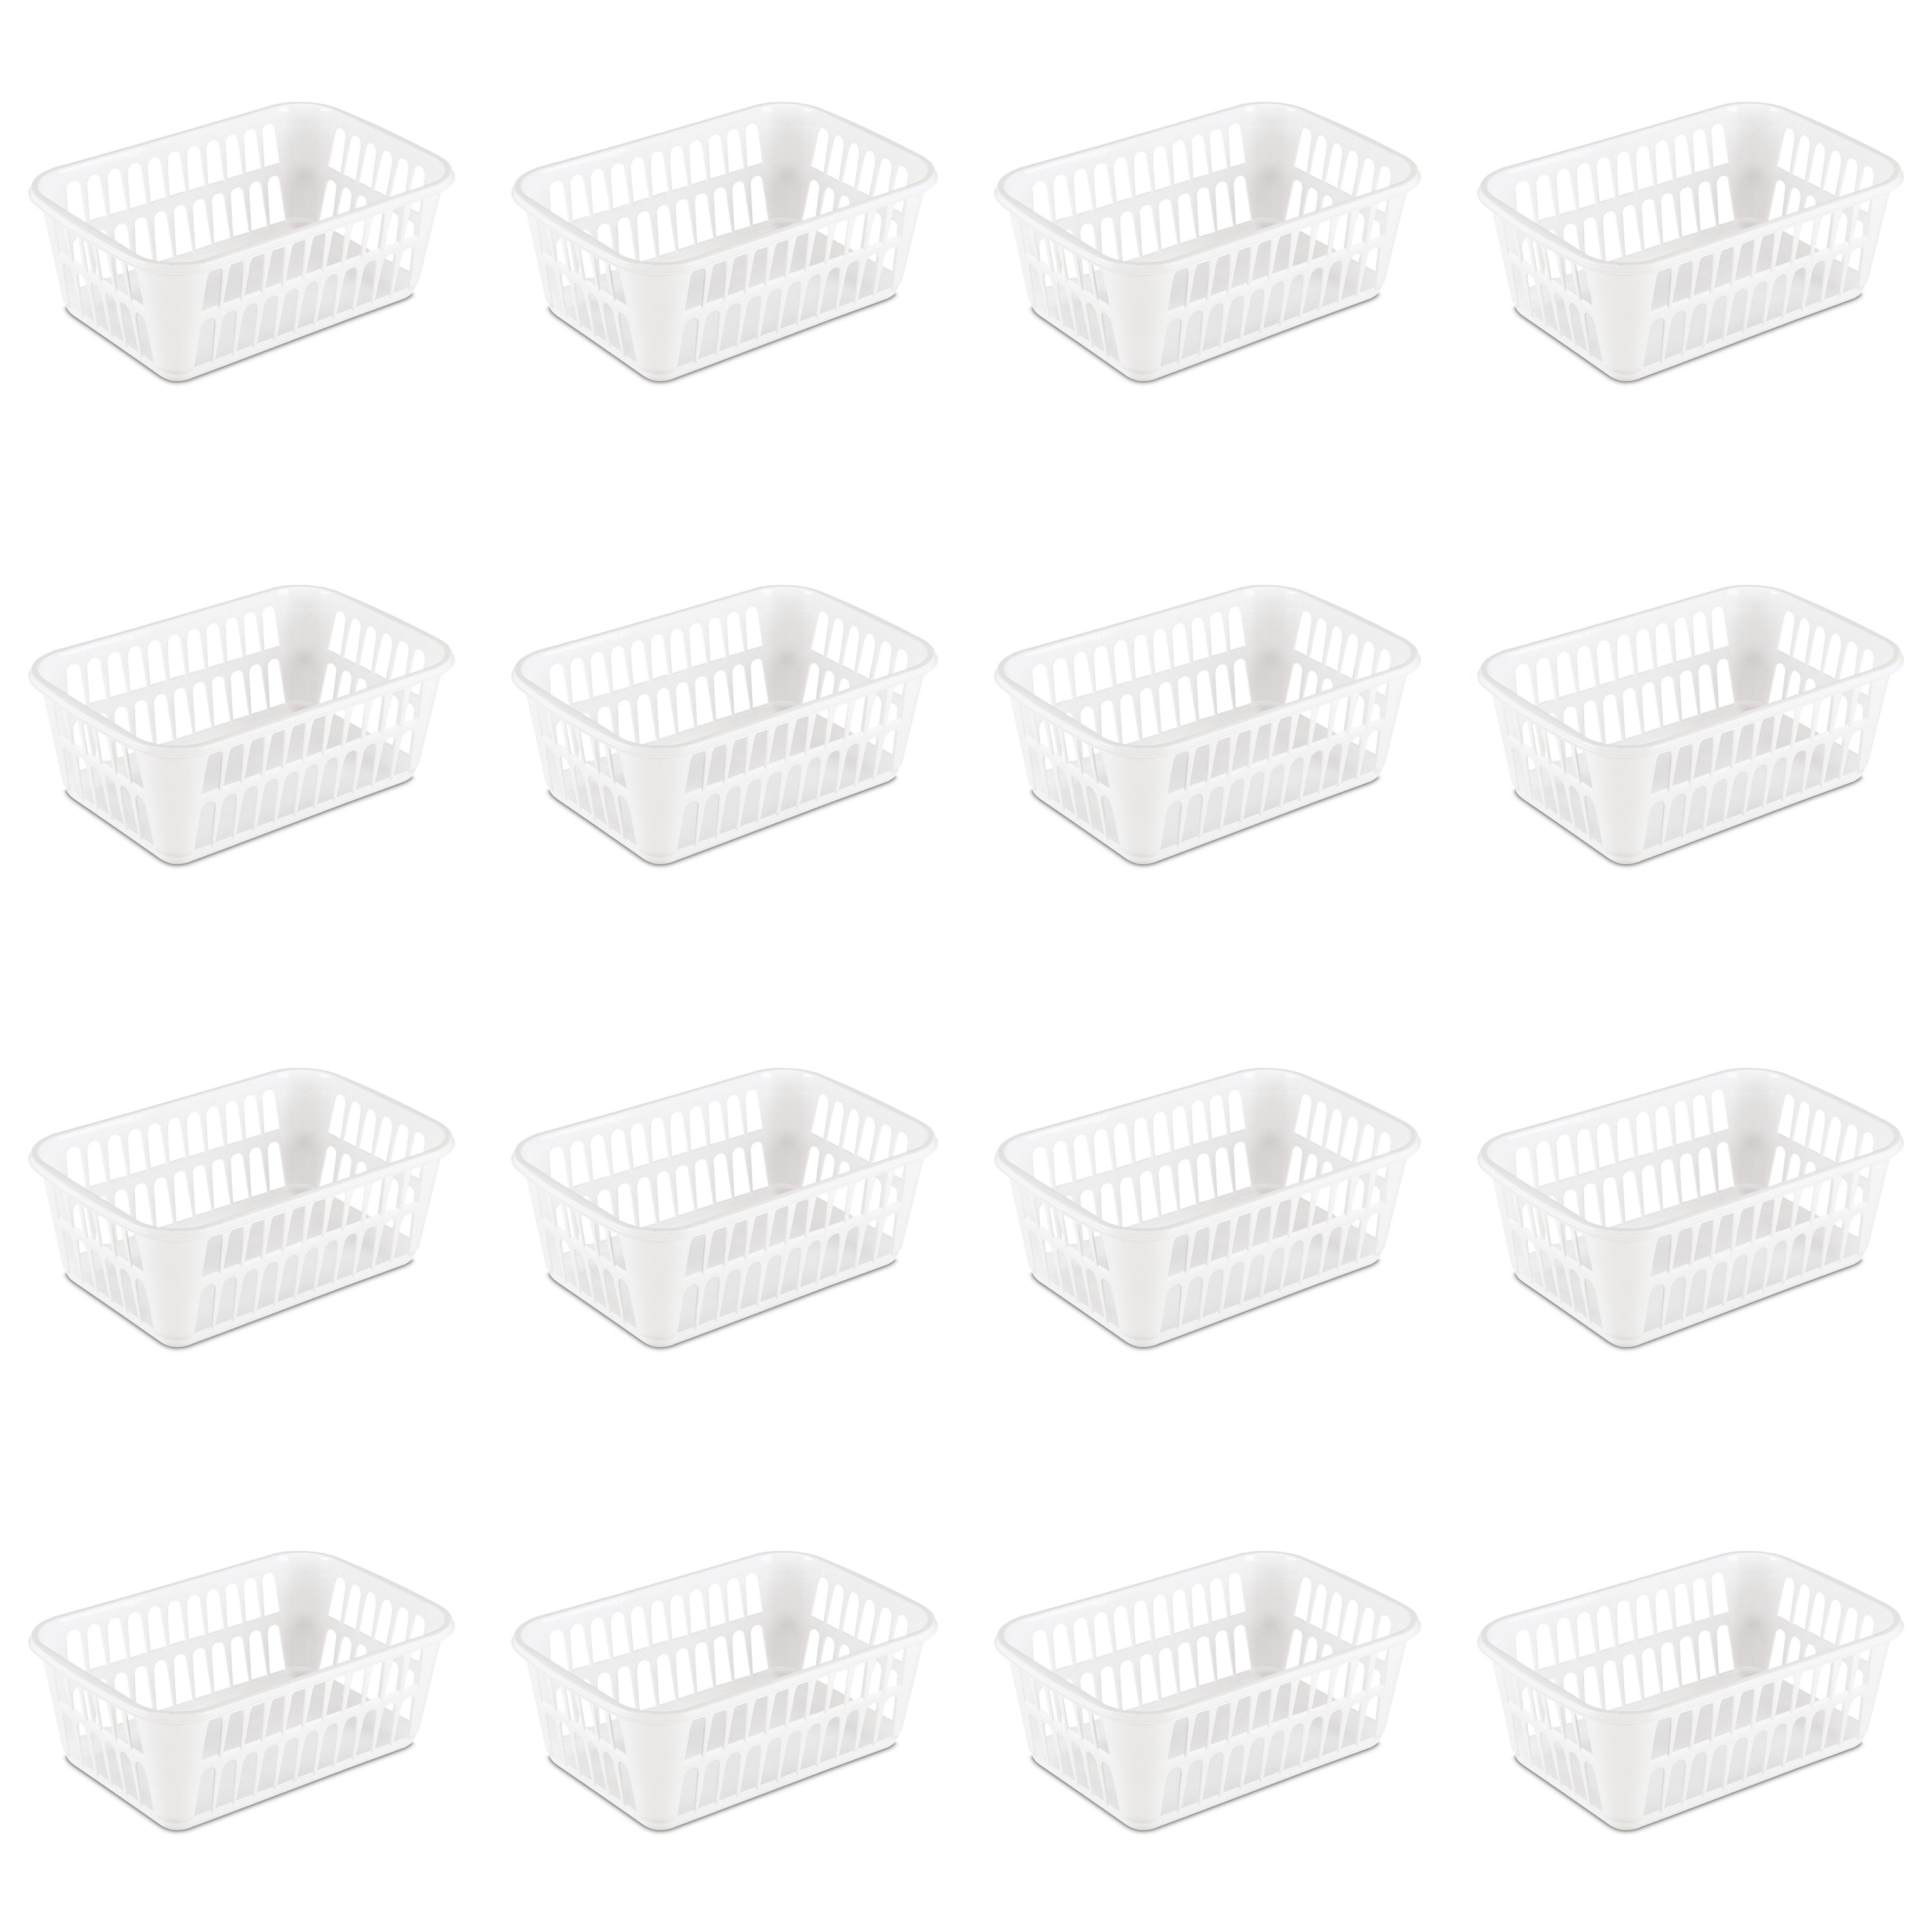 Sterilite Storage Basket Plastic, White, Set of 16 - image 1 of 9